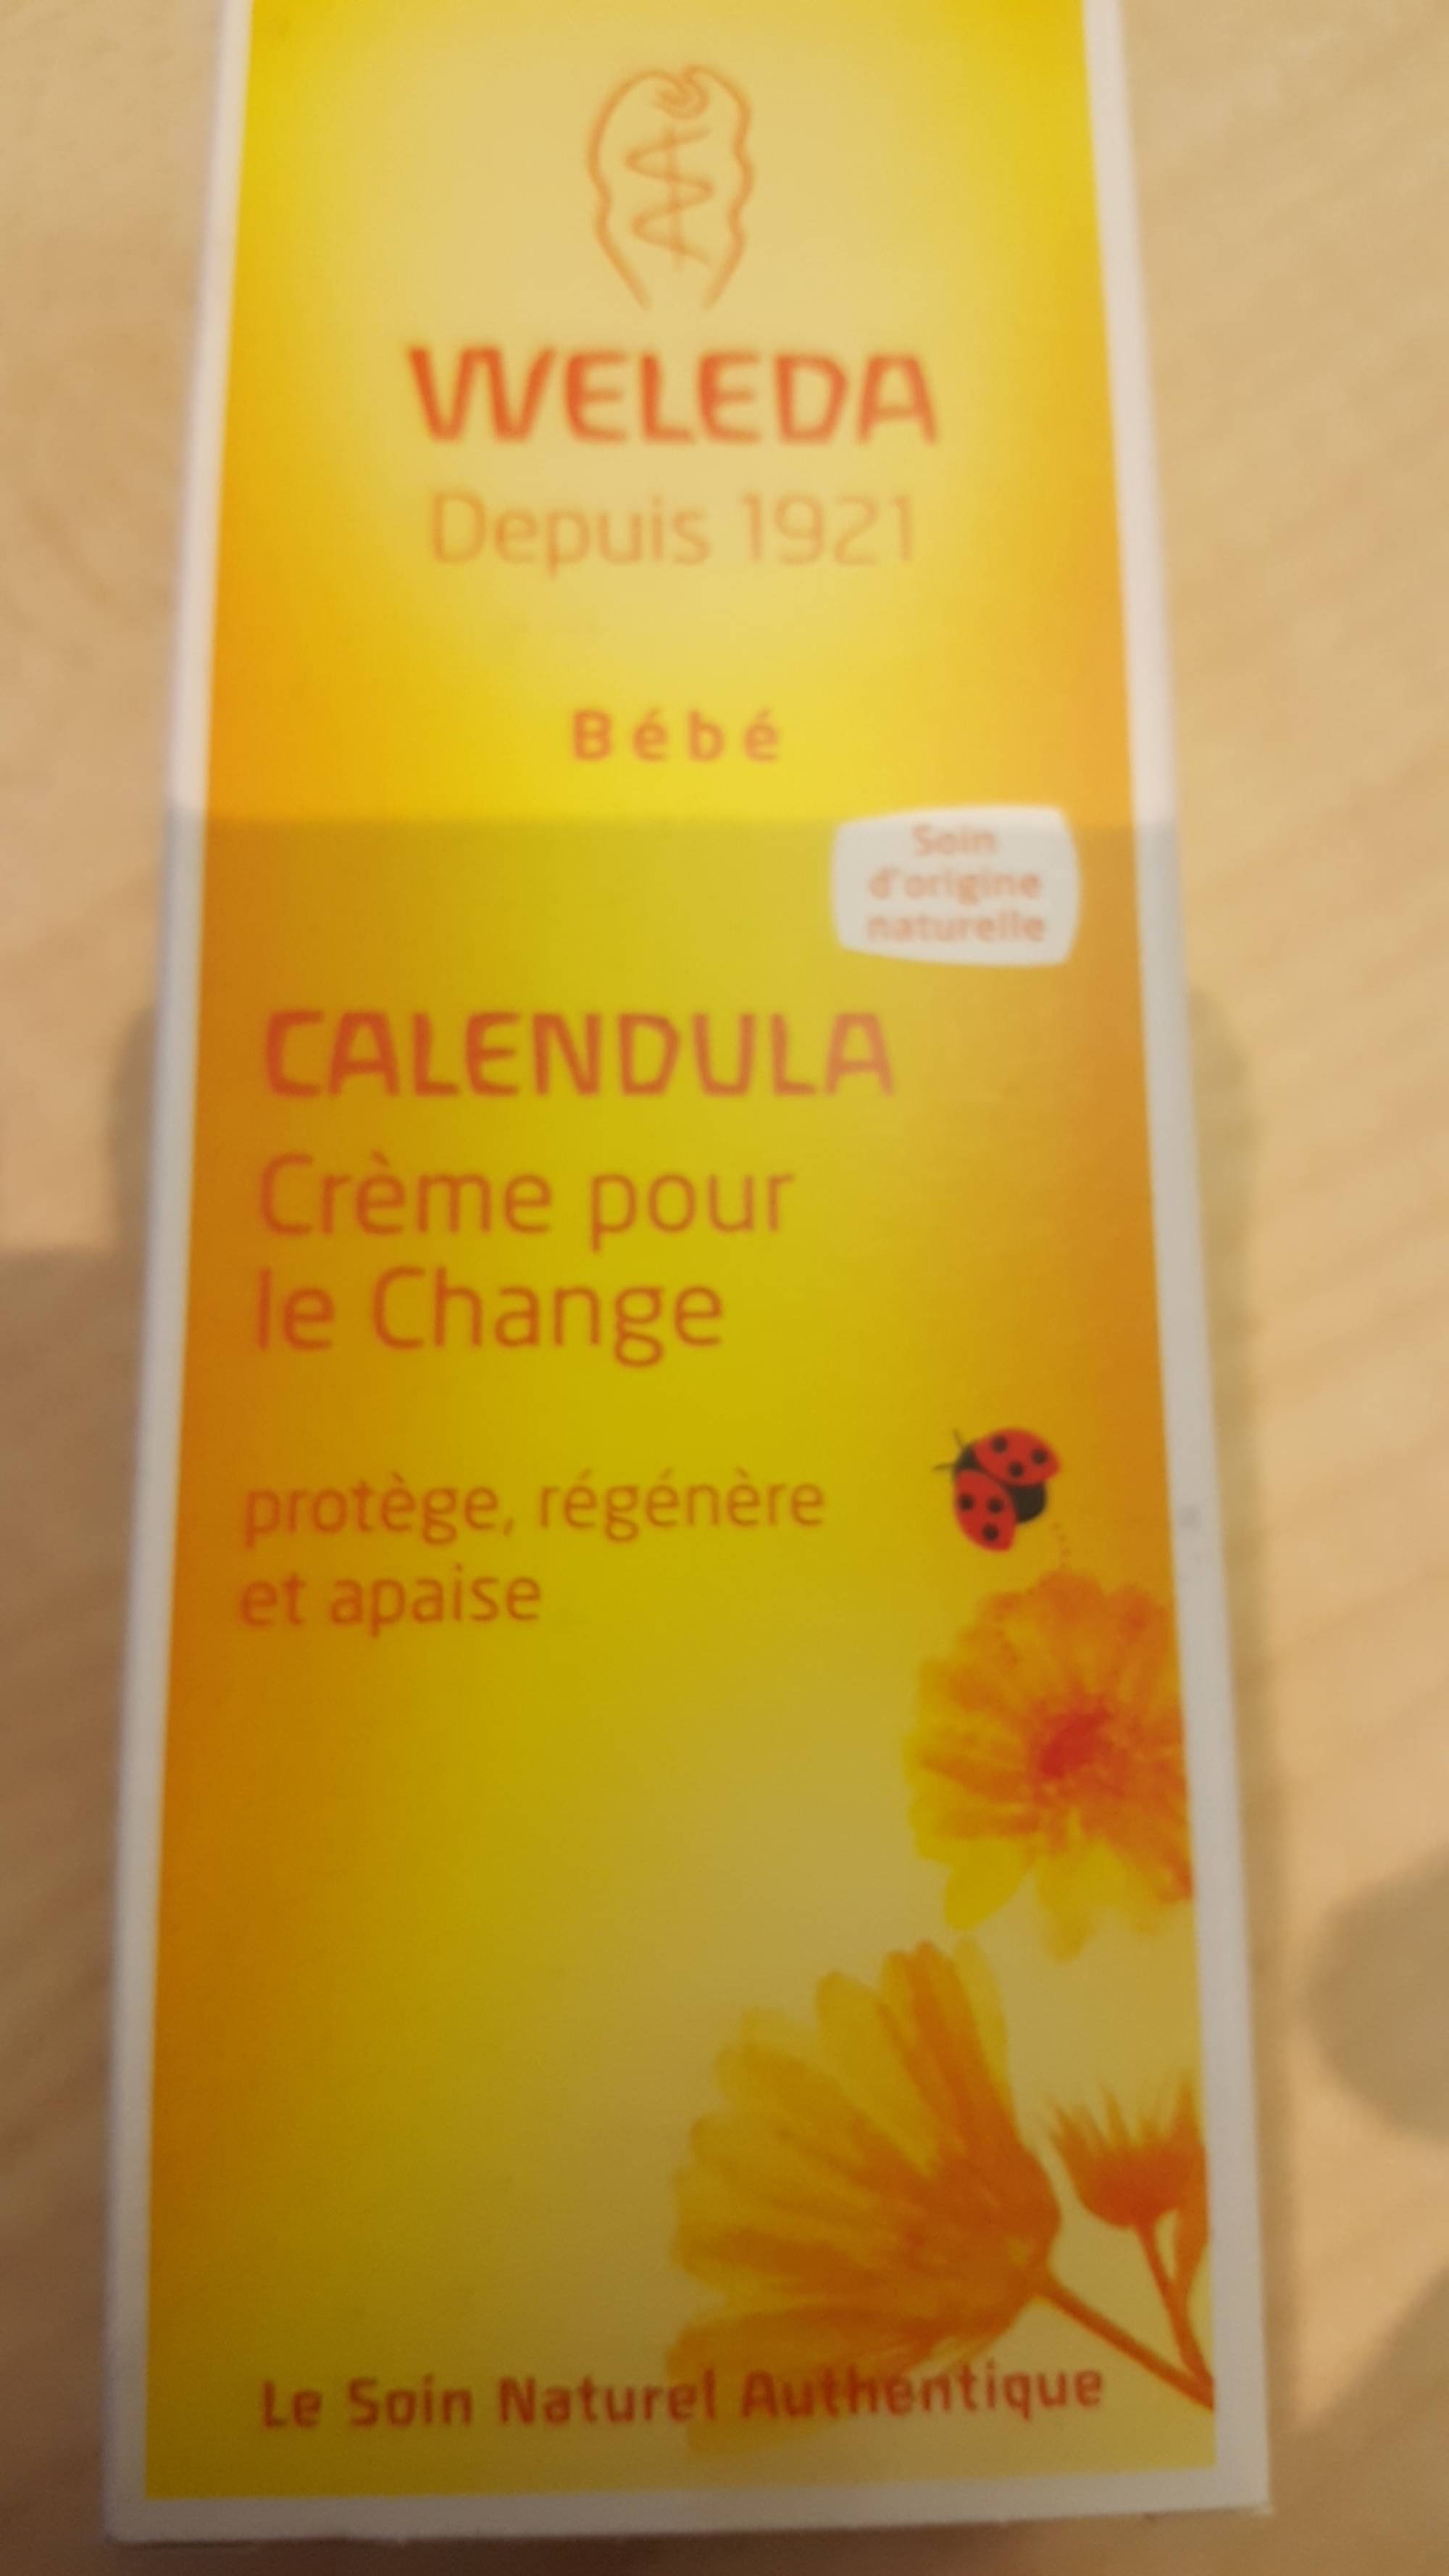 Crème pour le Change au Calendula - Weleda